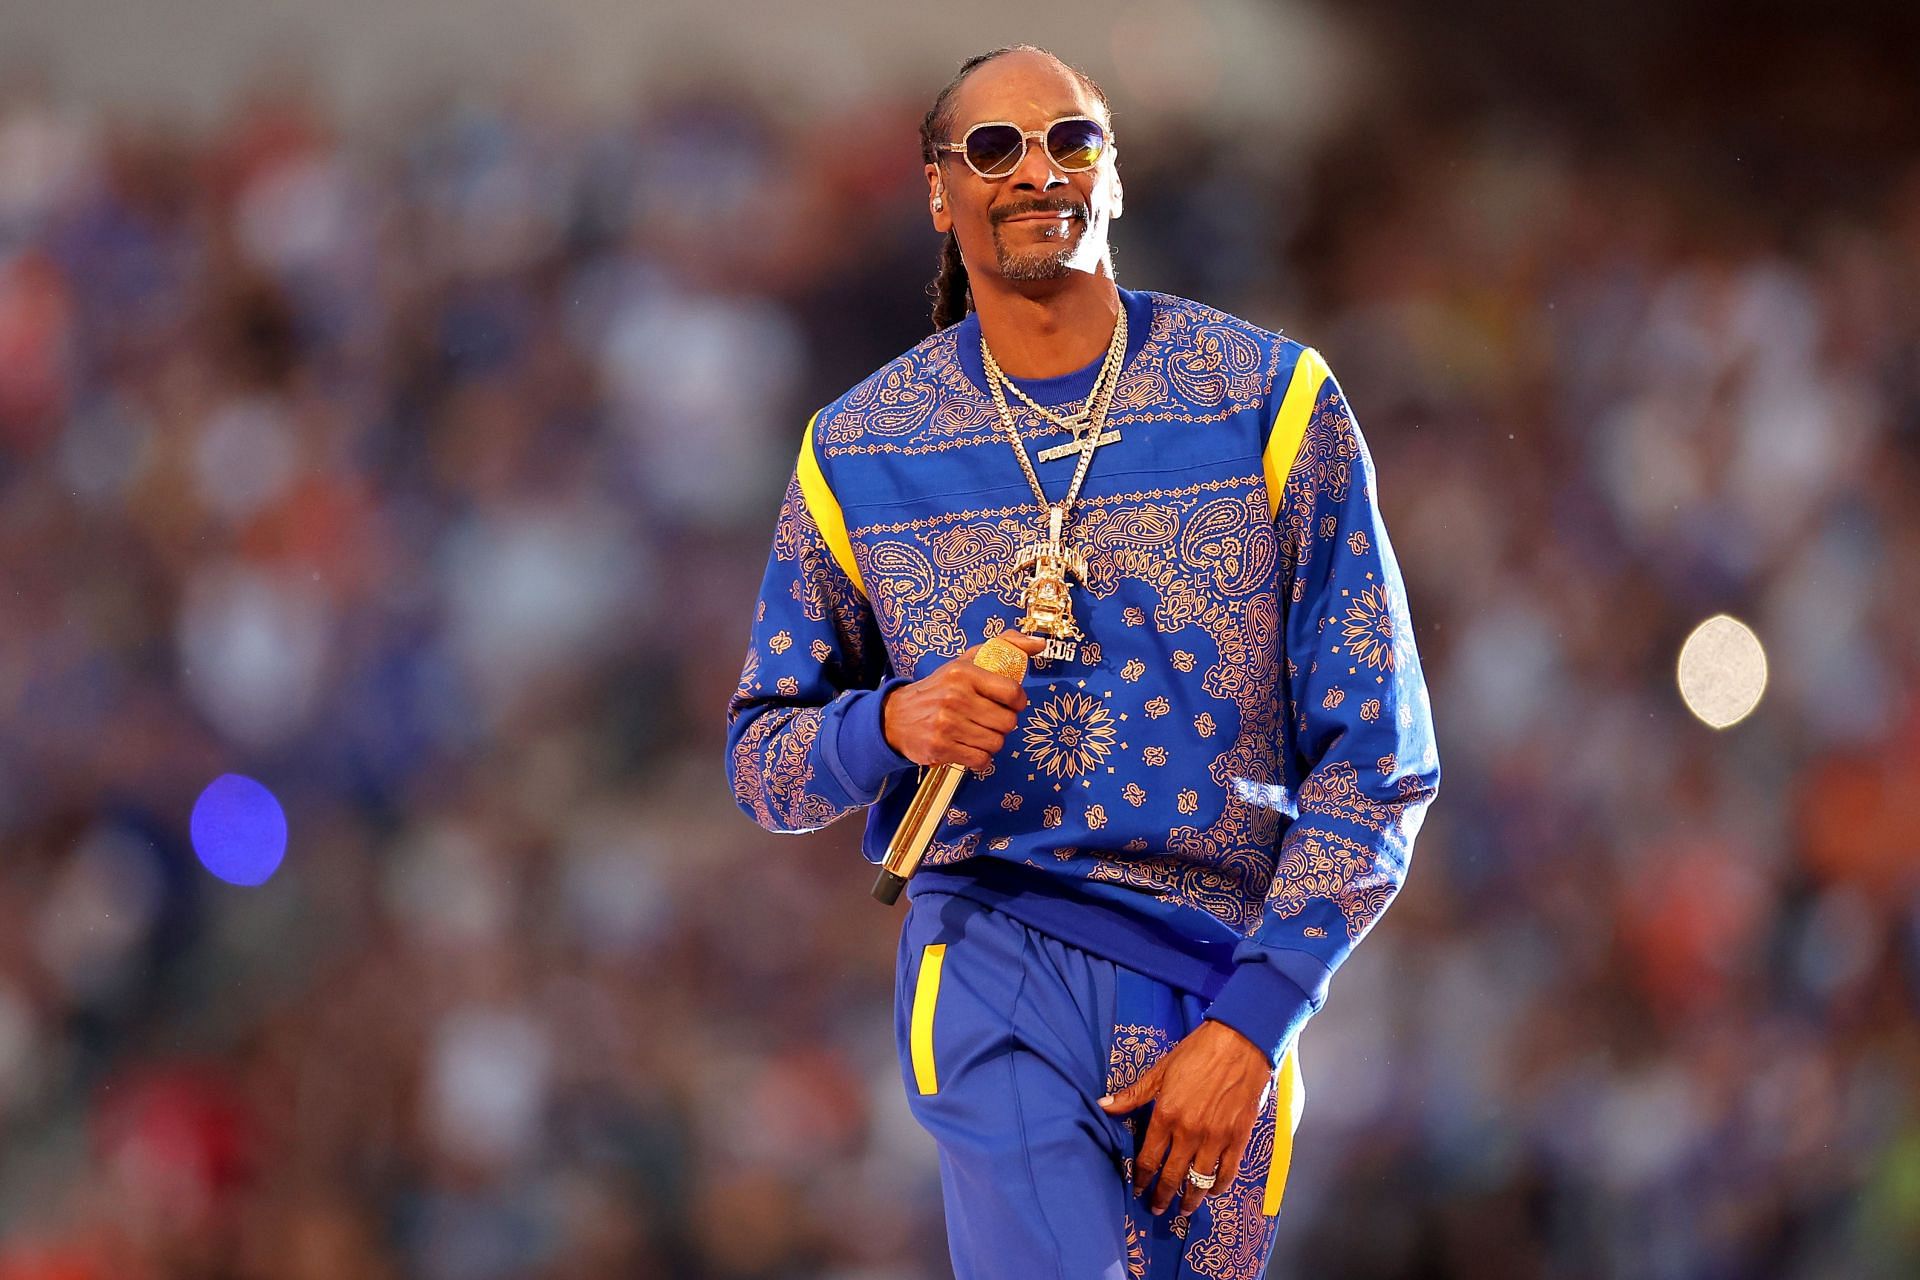 Pepsi Super Bowl LVI Halftime Show - Snoop Dogg, alumni from Long Beach Polytechnic High School